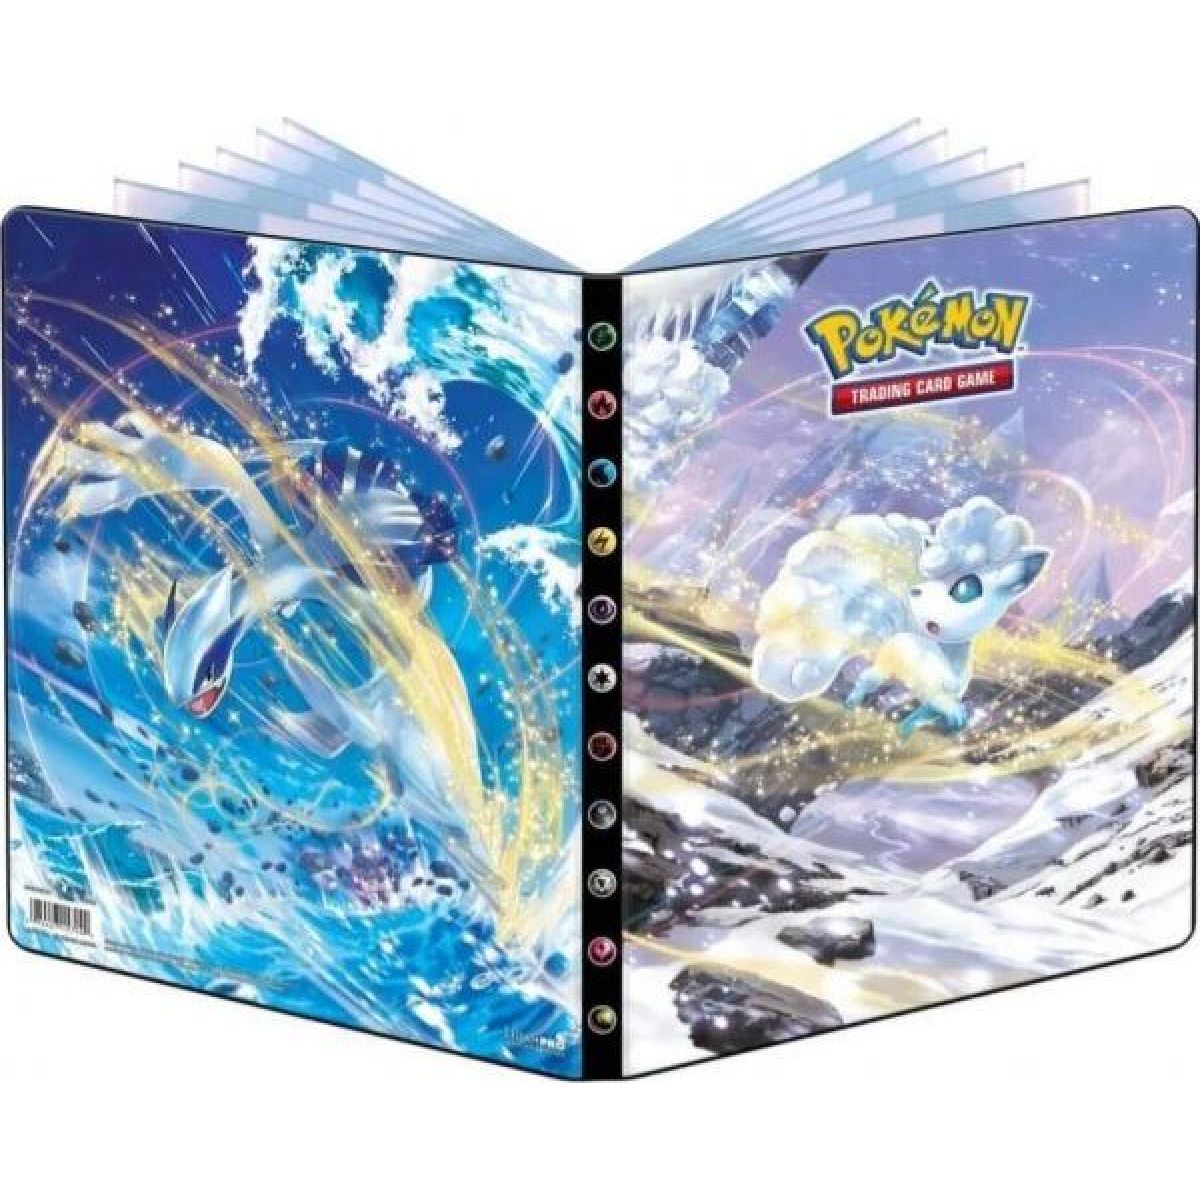 Pokémon UP: Sword and Shield 12 - Silver Tempest - A4 album